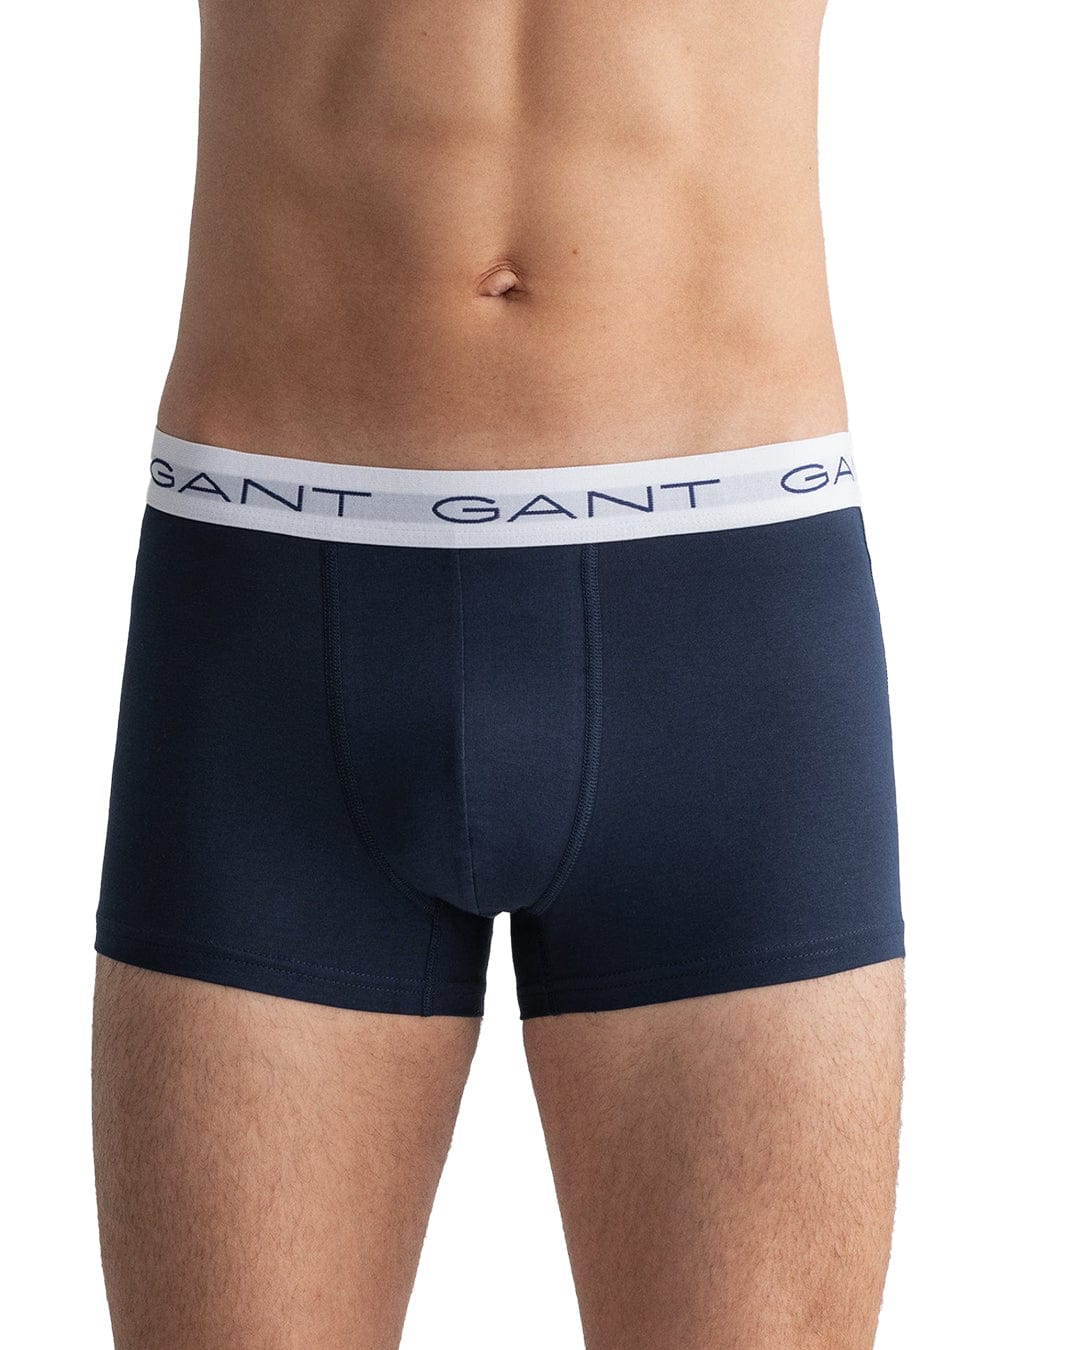 Gant Underwear Gant White And Navy Rugby Striped Three-Pack Trunks